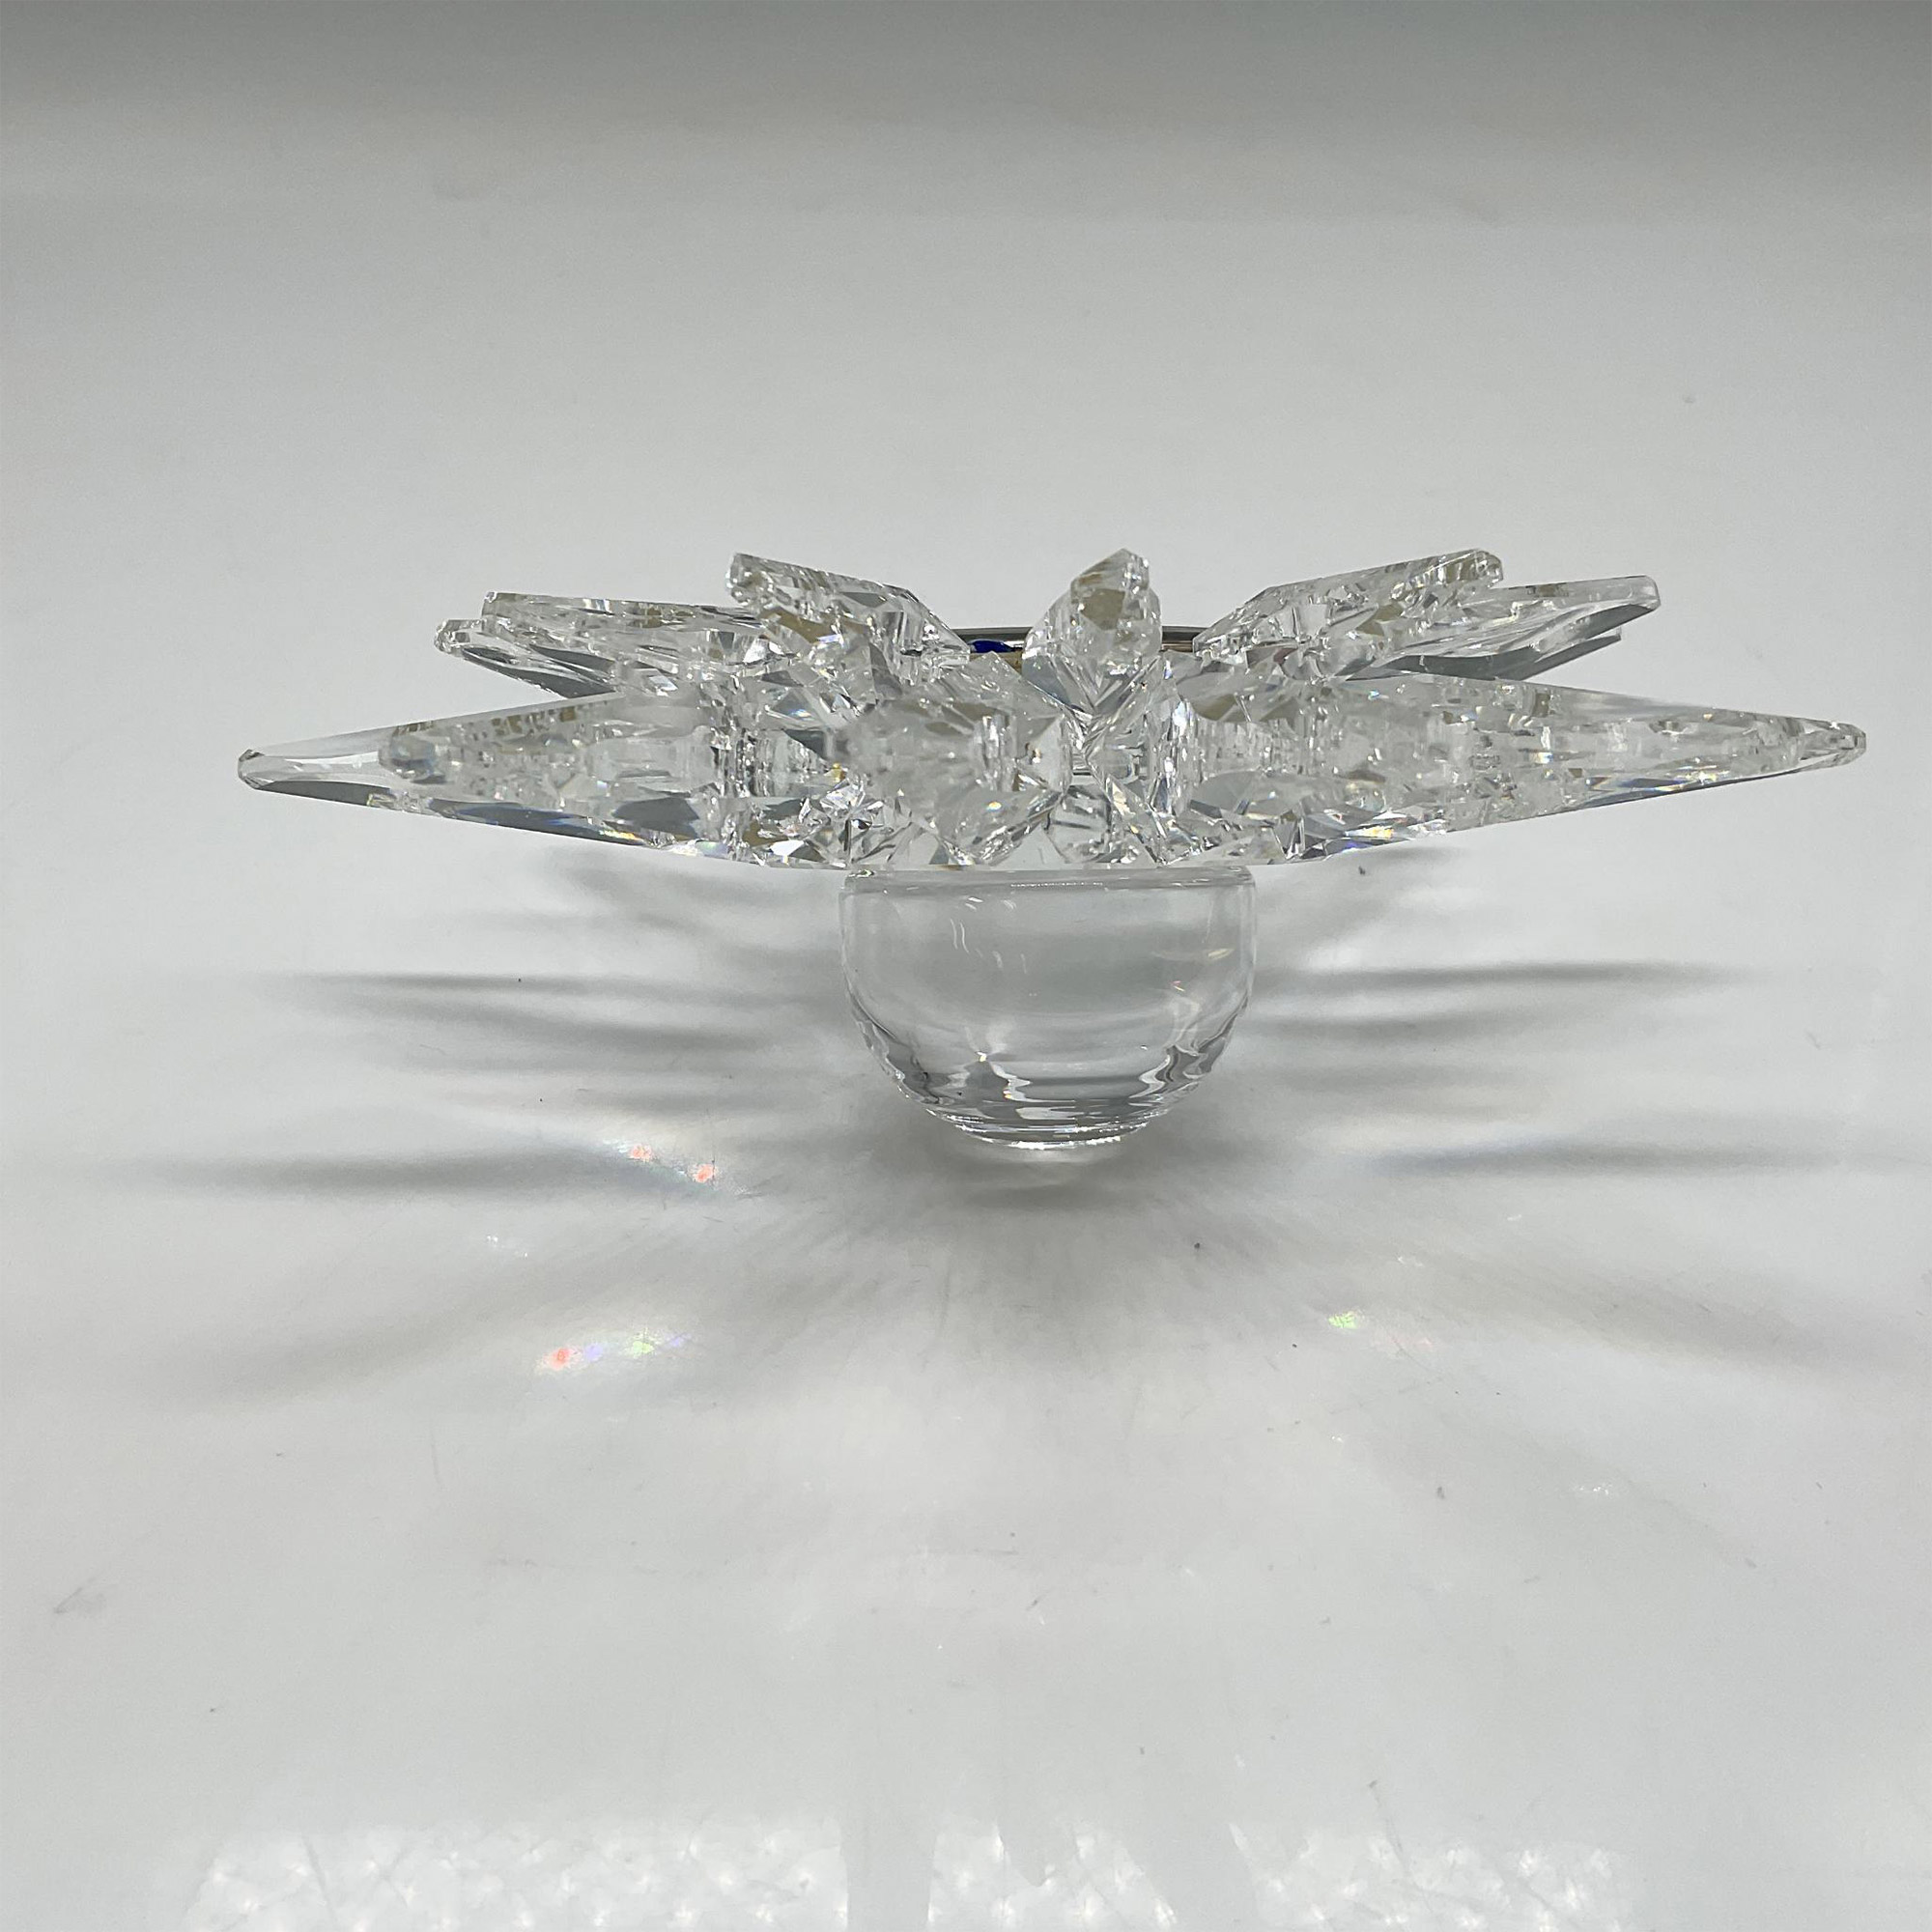 Swarovski Silver Crystal Solaris Table Clock - Image 2 of 4